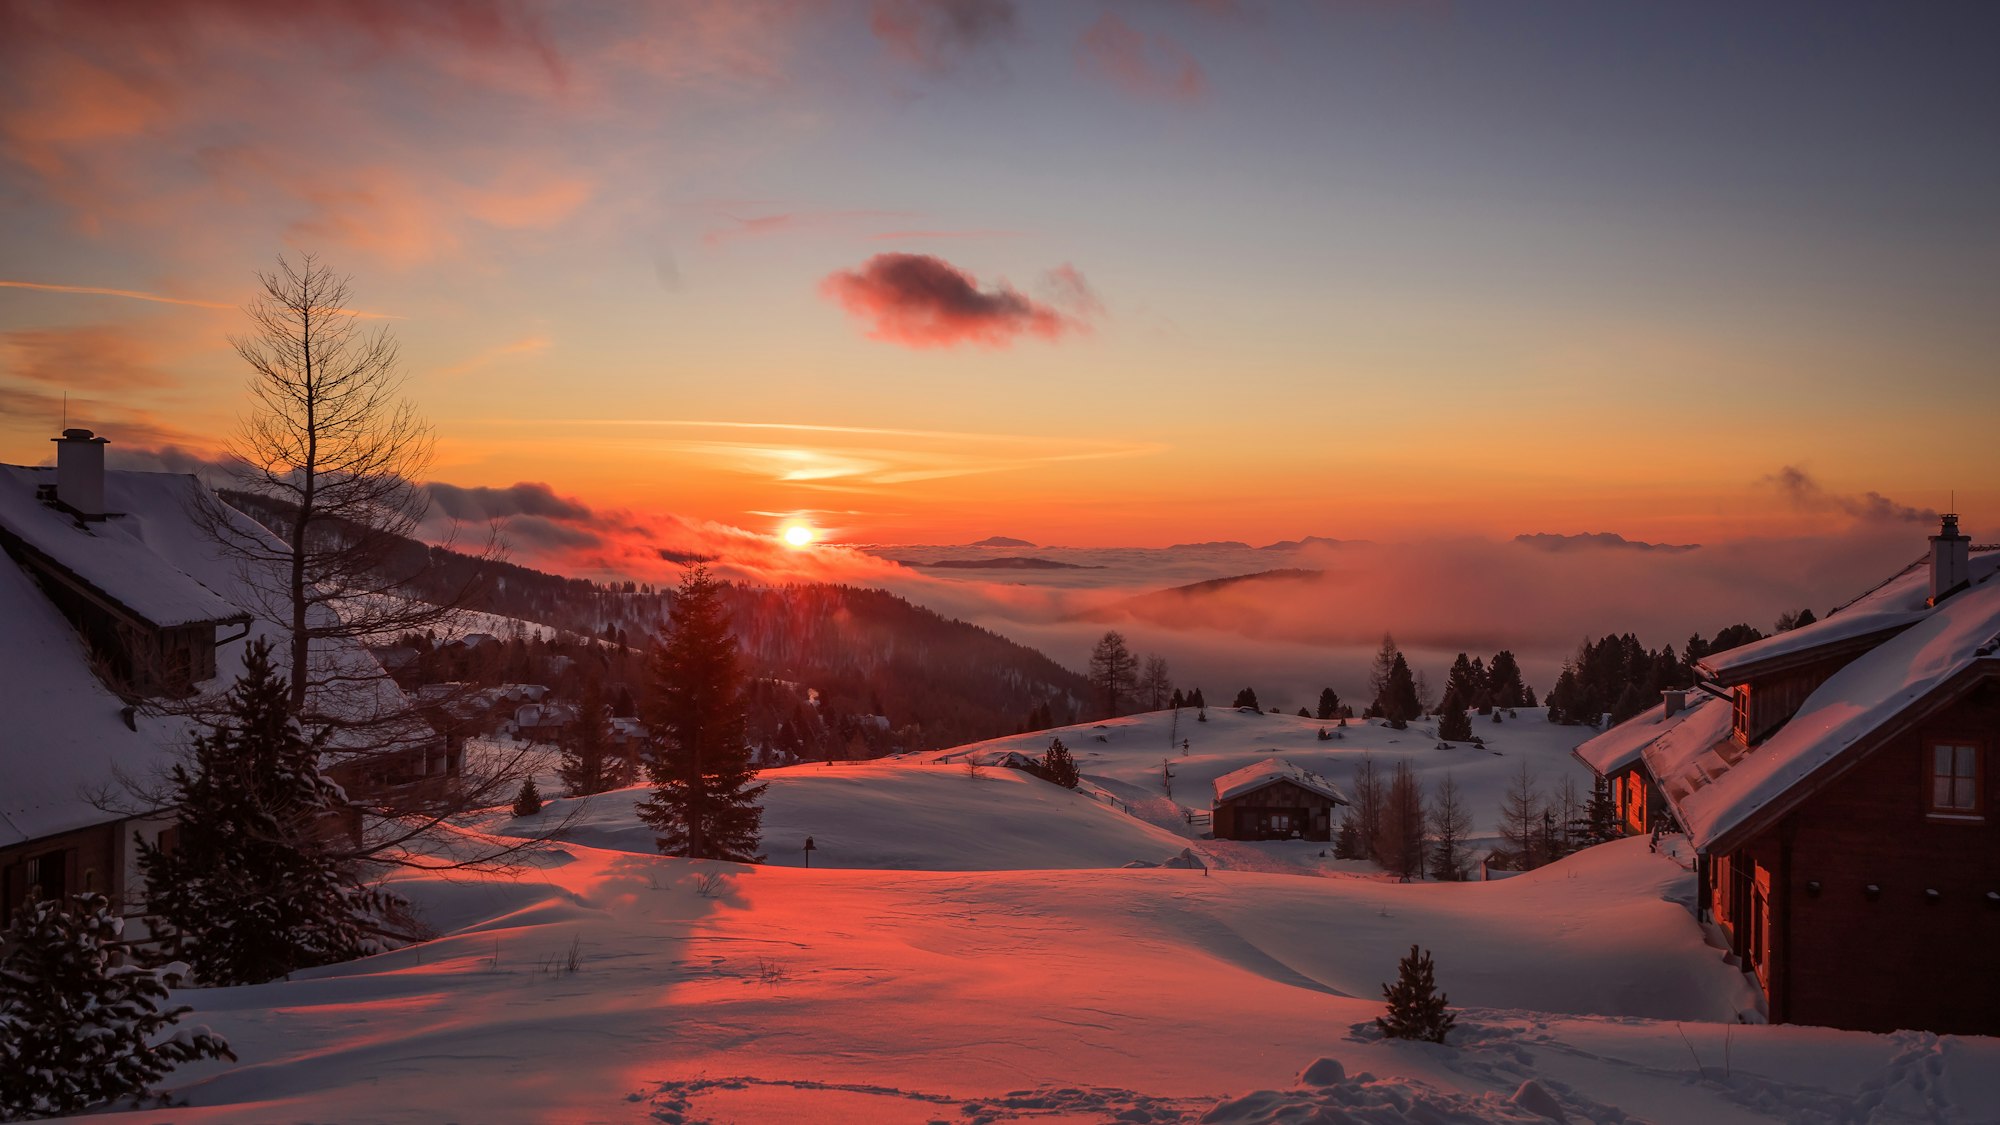 Snowed In - Winter wonderland in the Alps